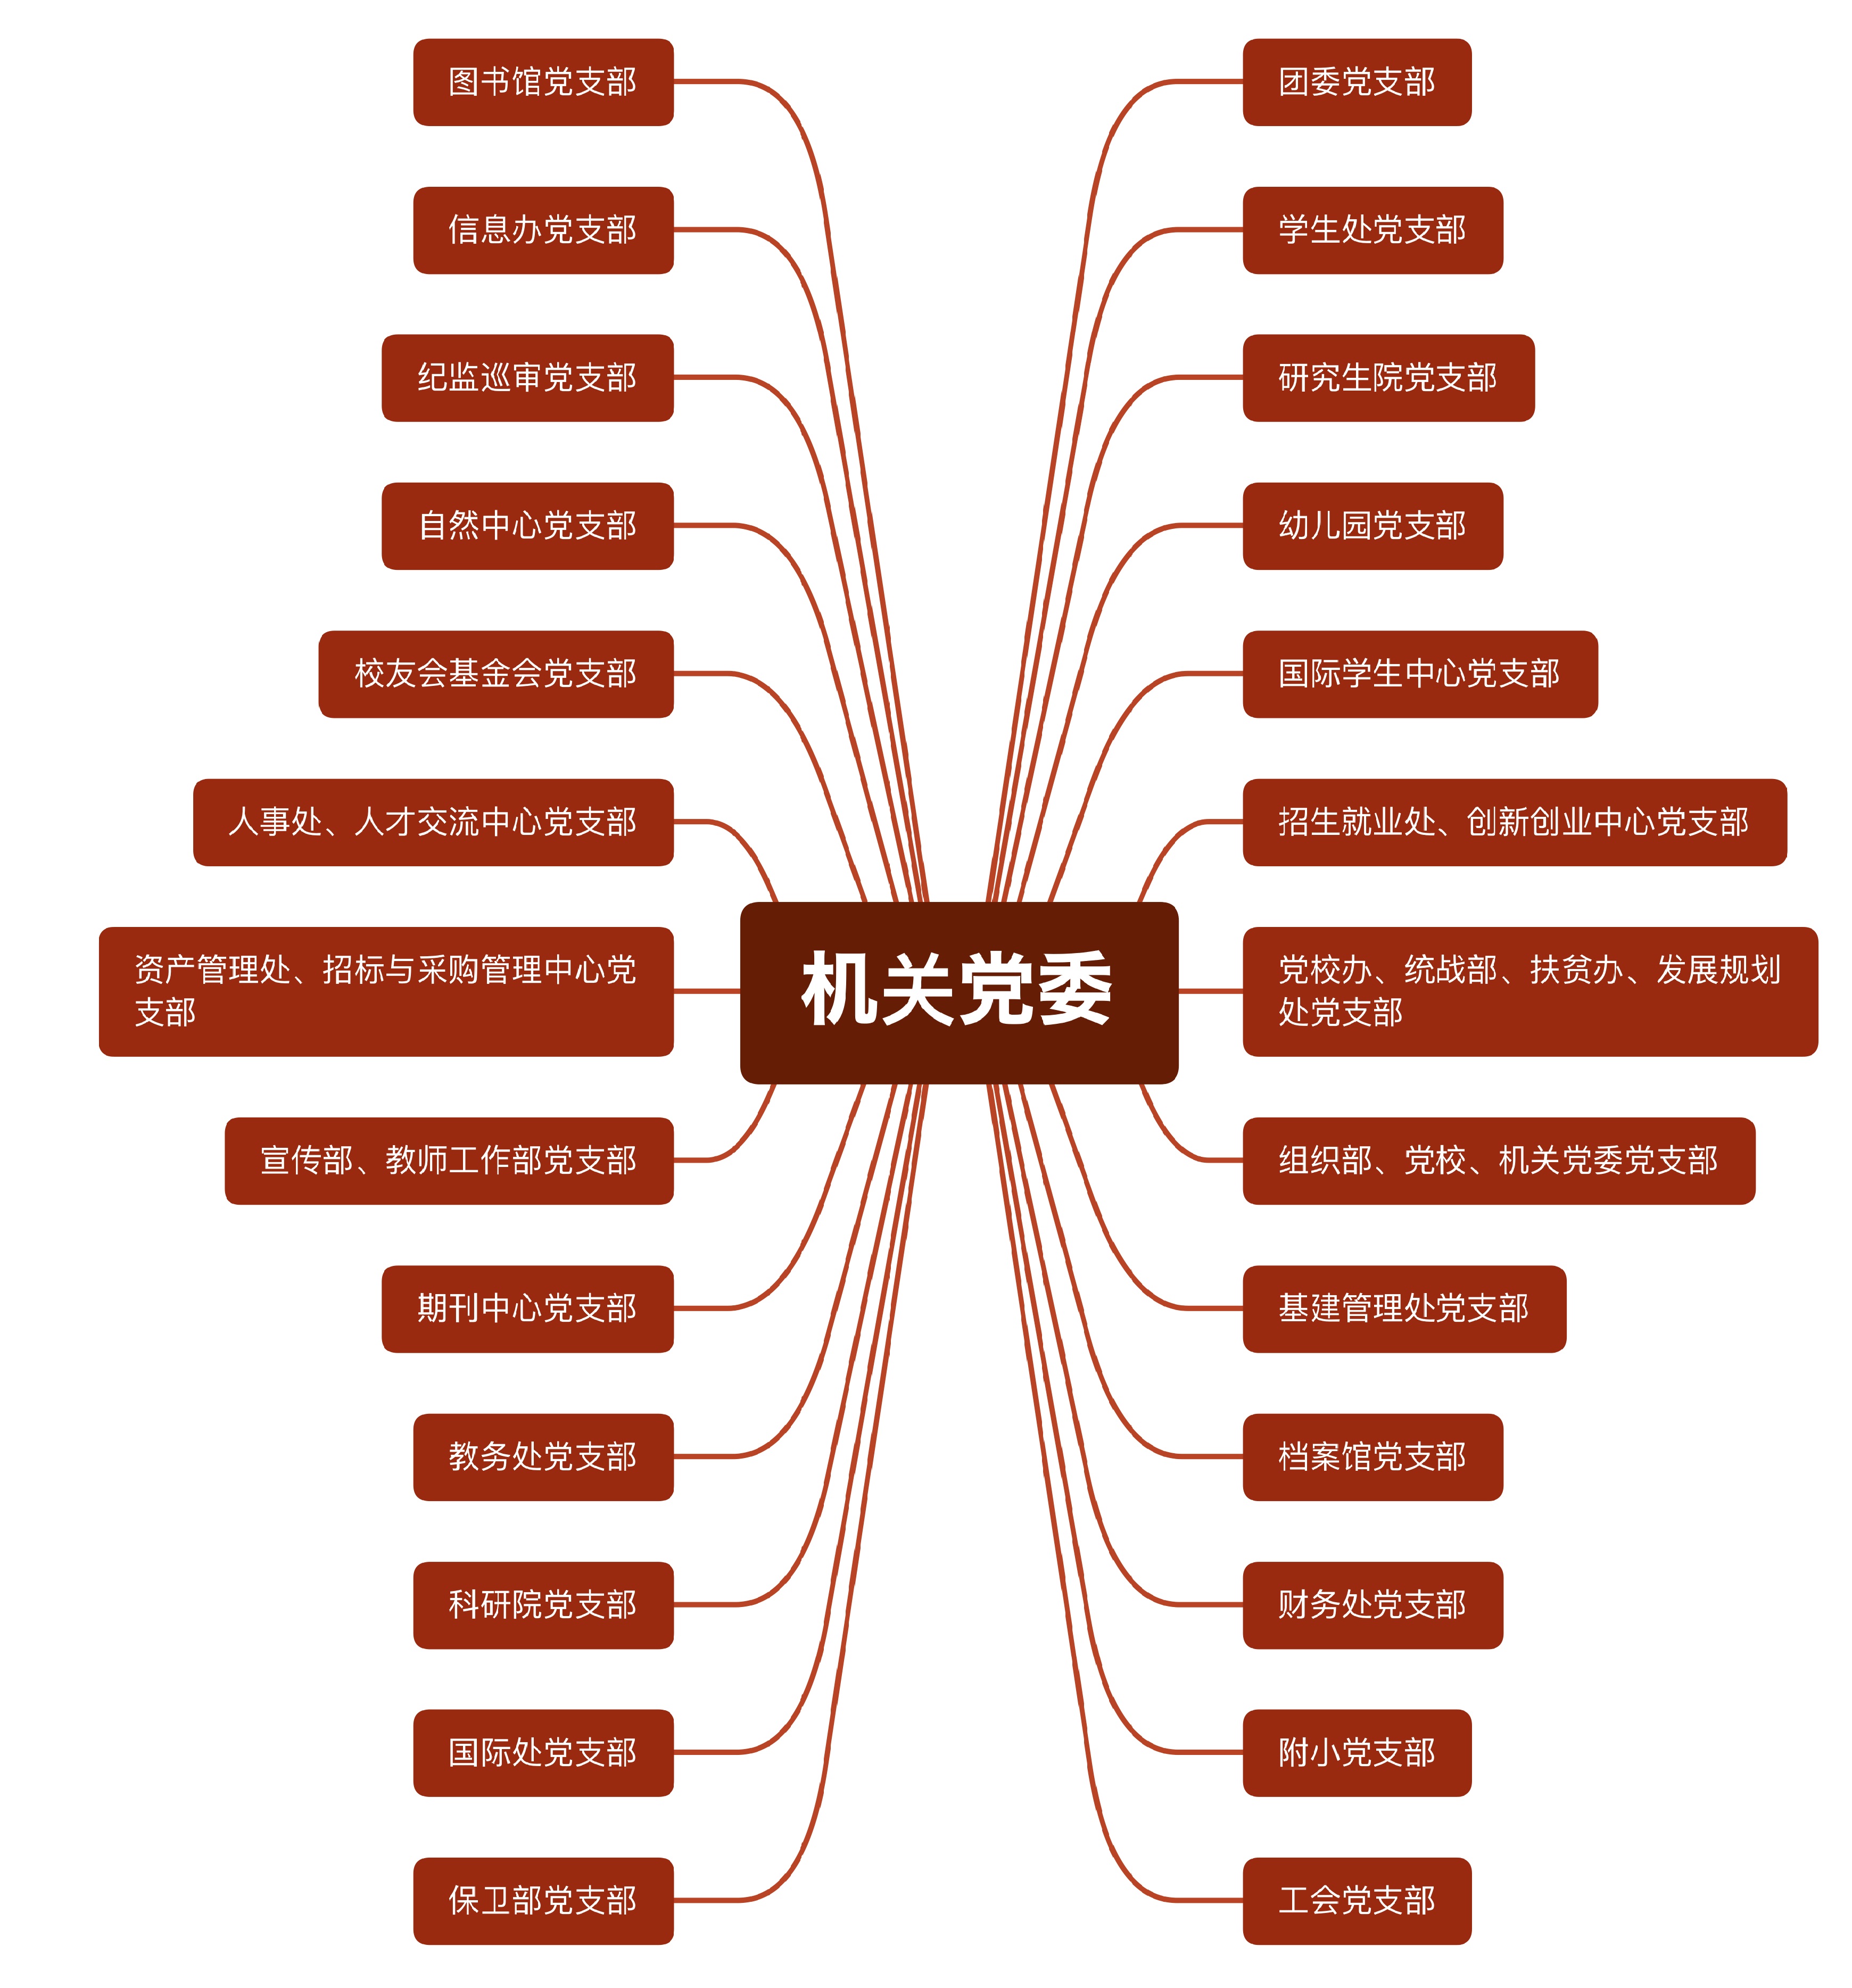 http://dangwei.ustb.edu.cn/upload/组织结构图2016-2.jpg